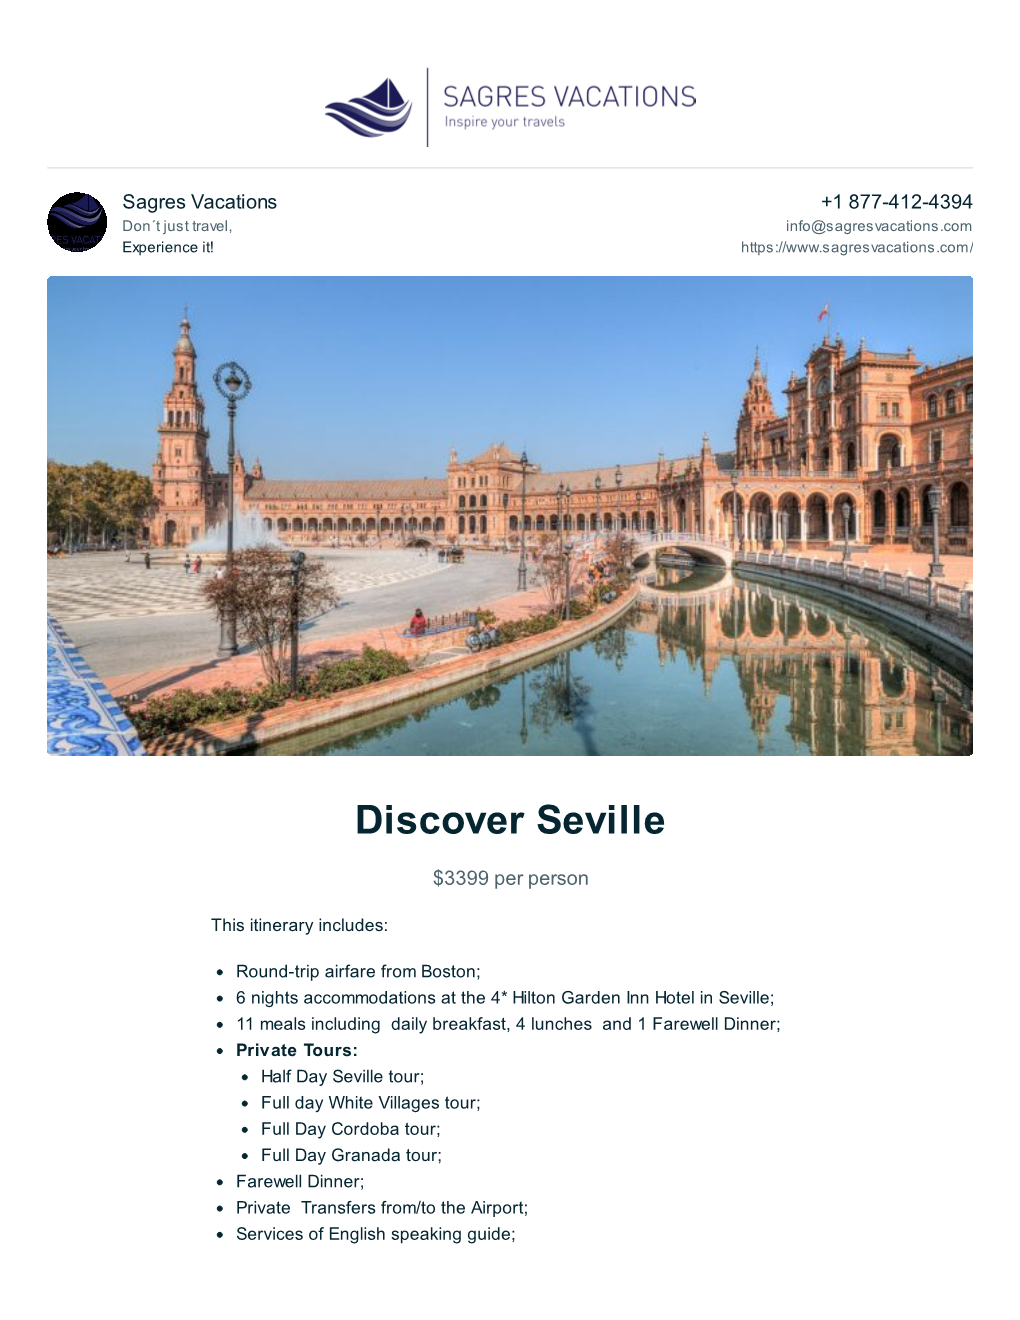 Discover Seville